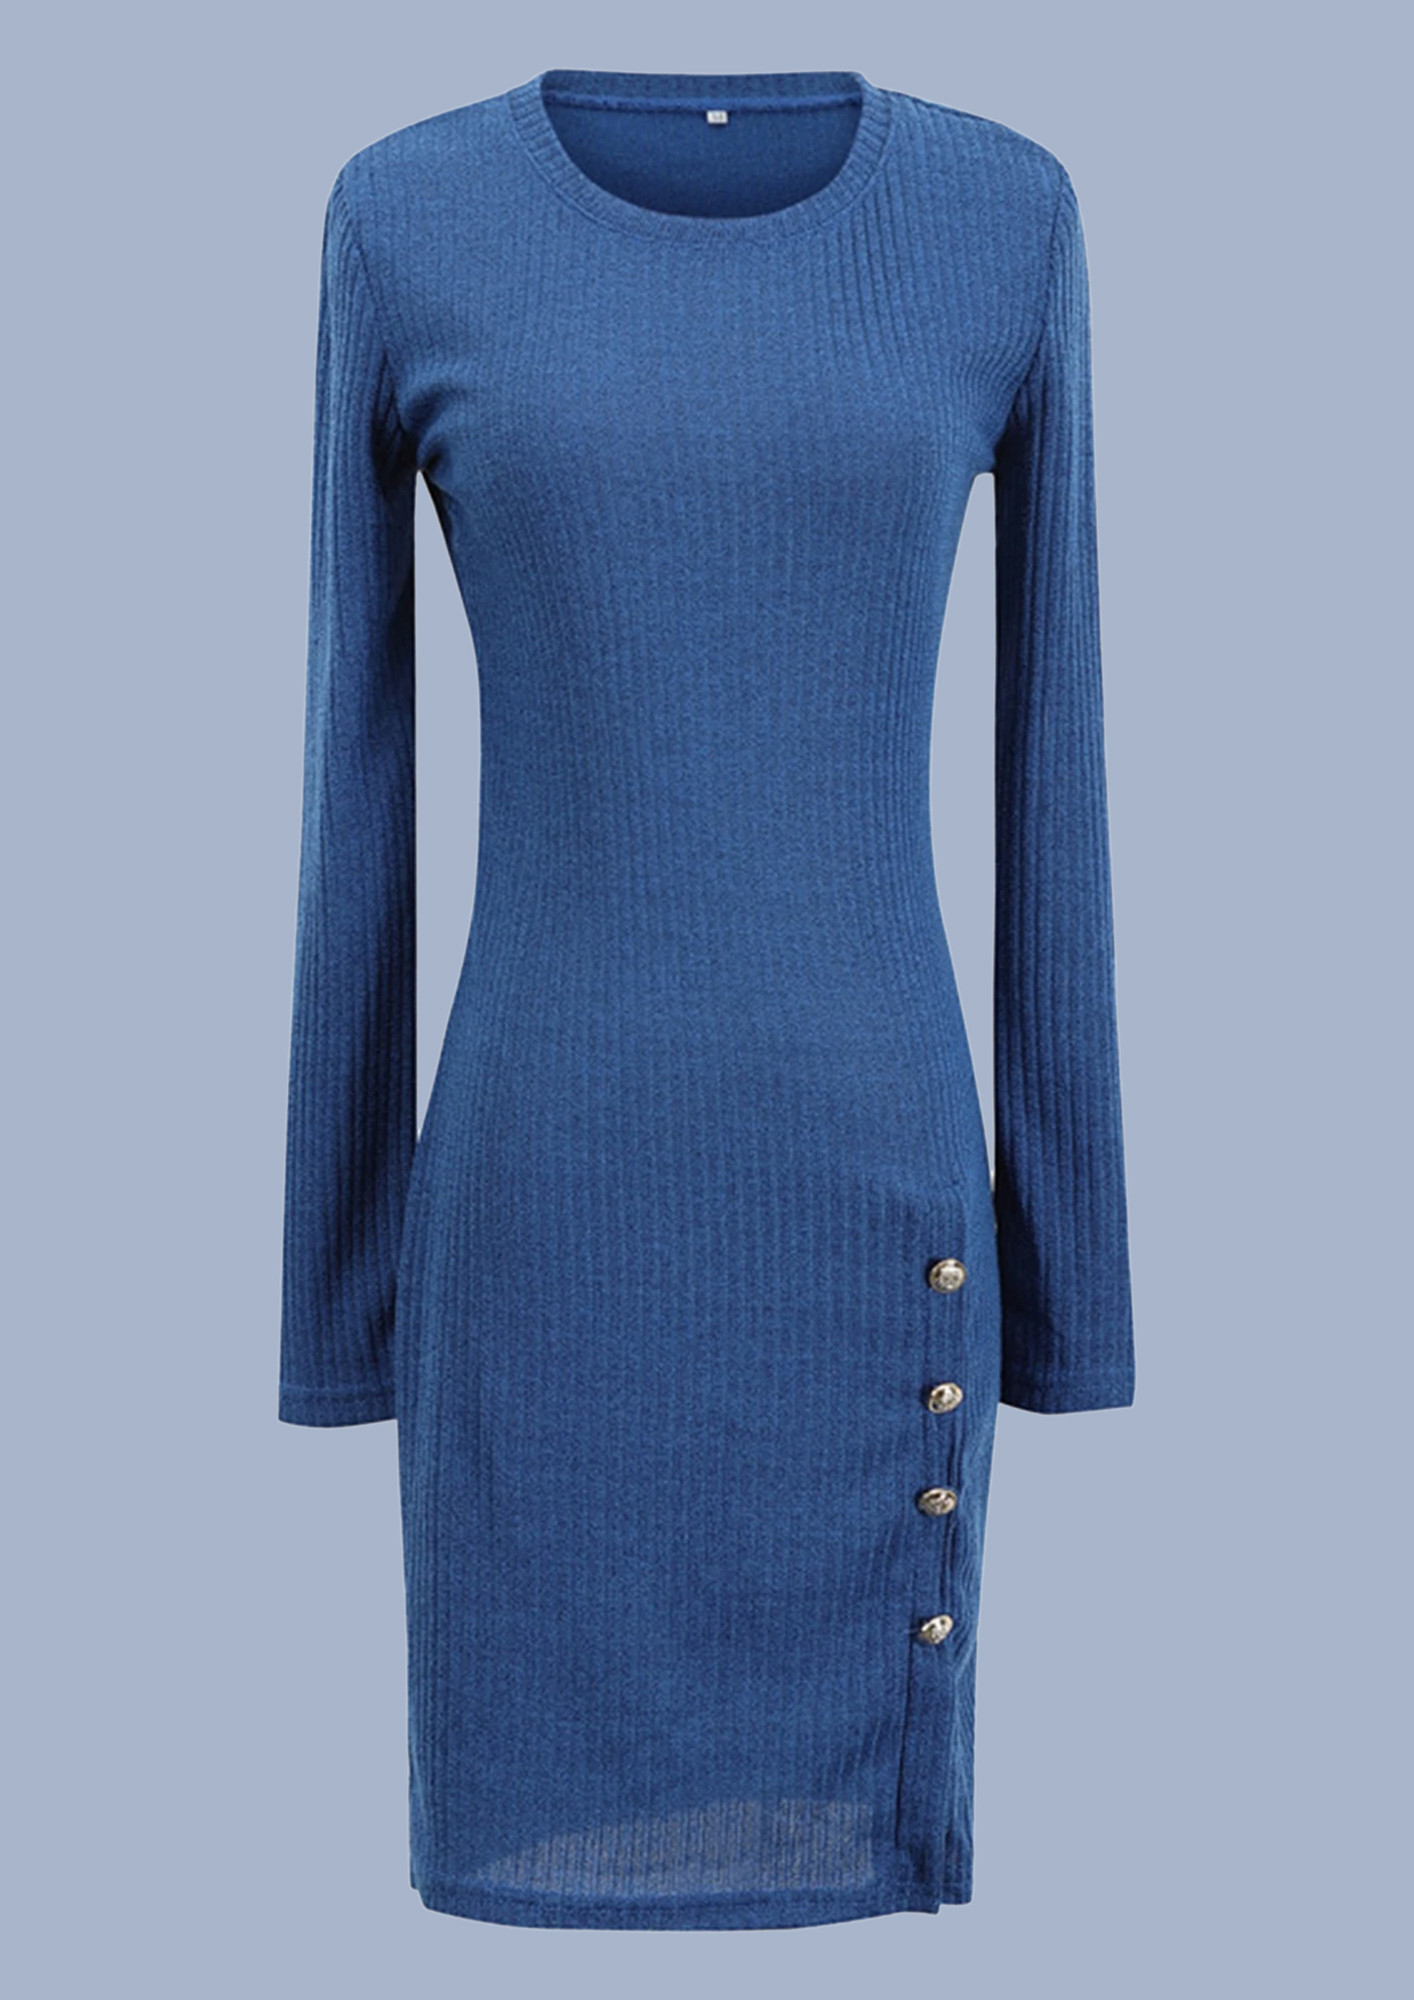 CREW NECK BUTTON-DETAIL BODYCON BLUE DRESS